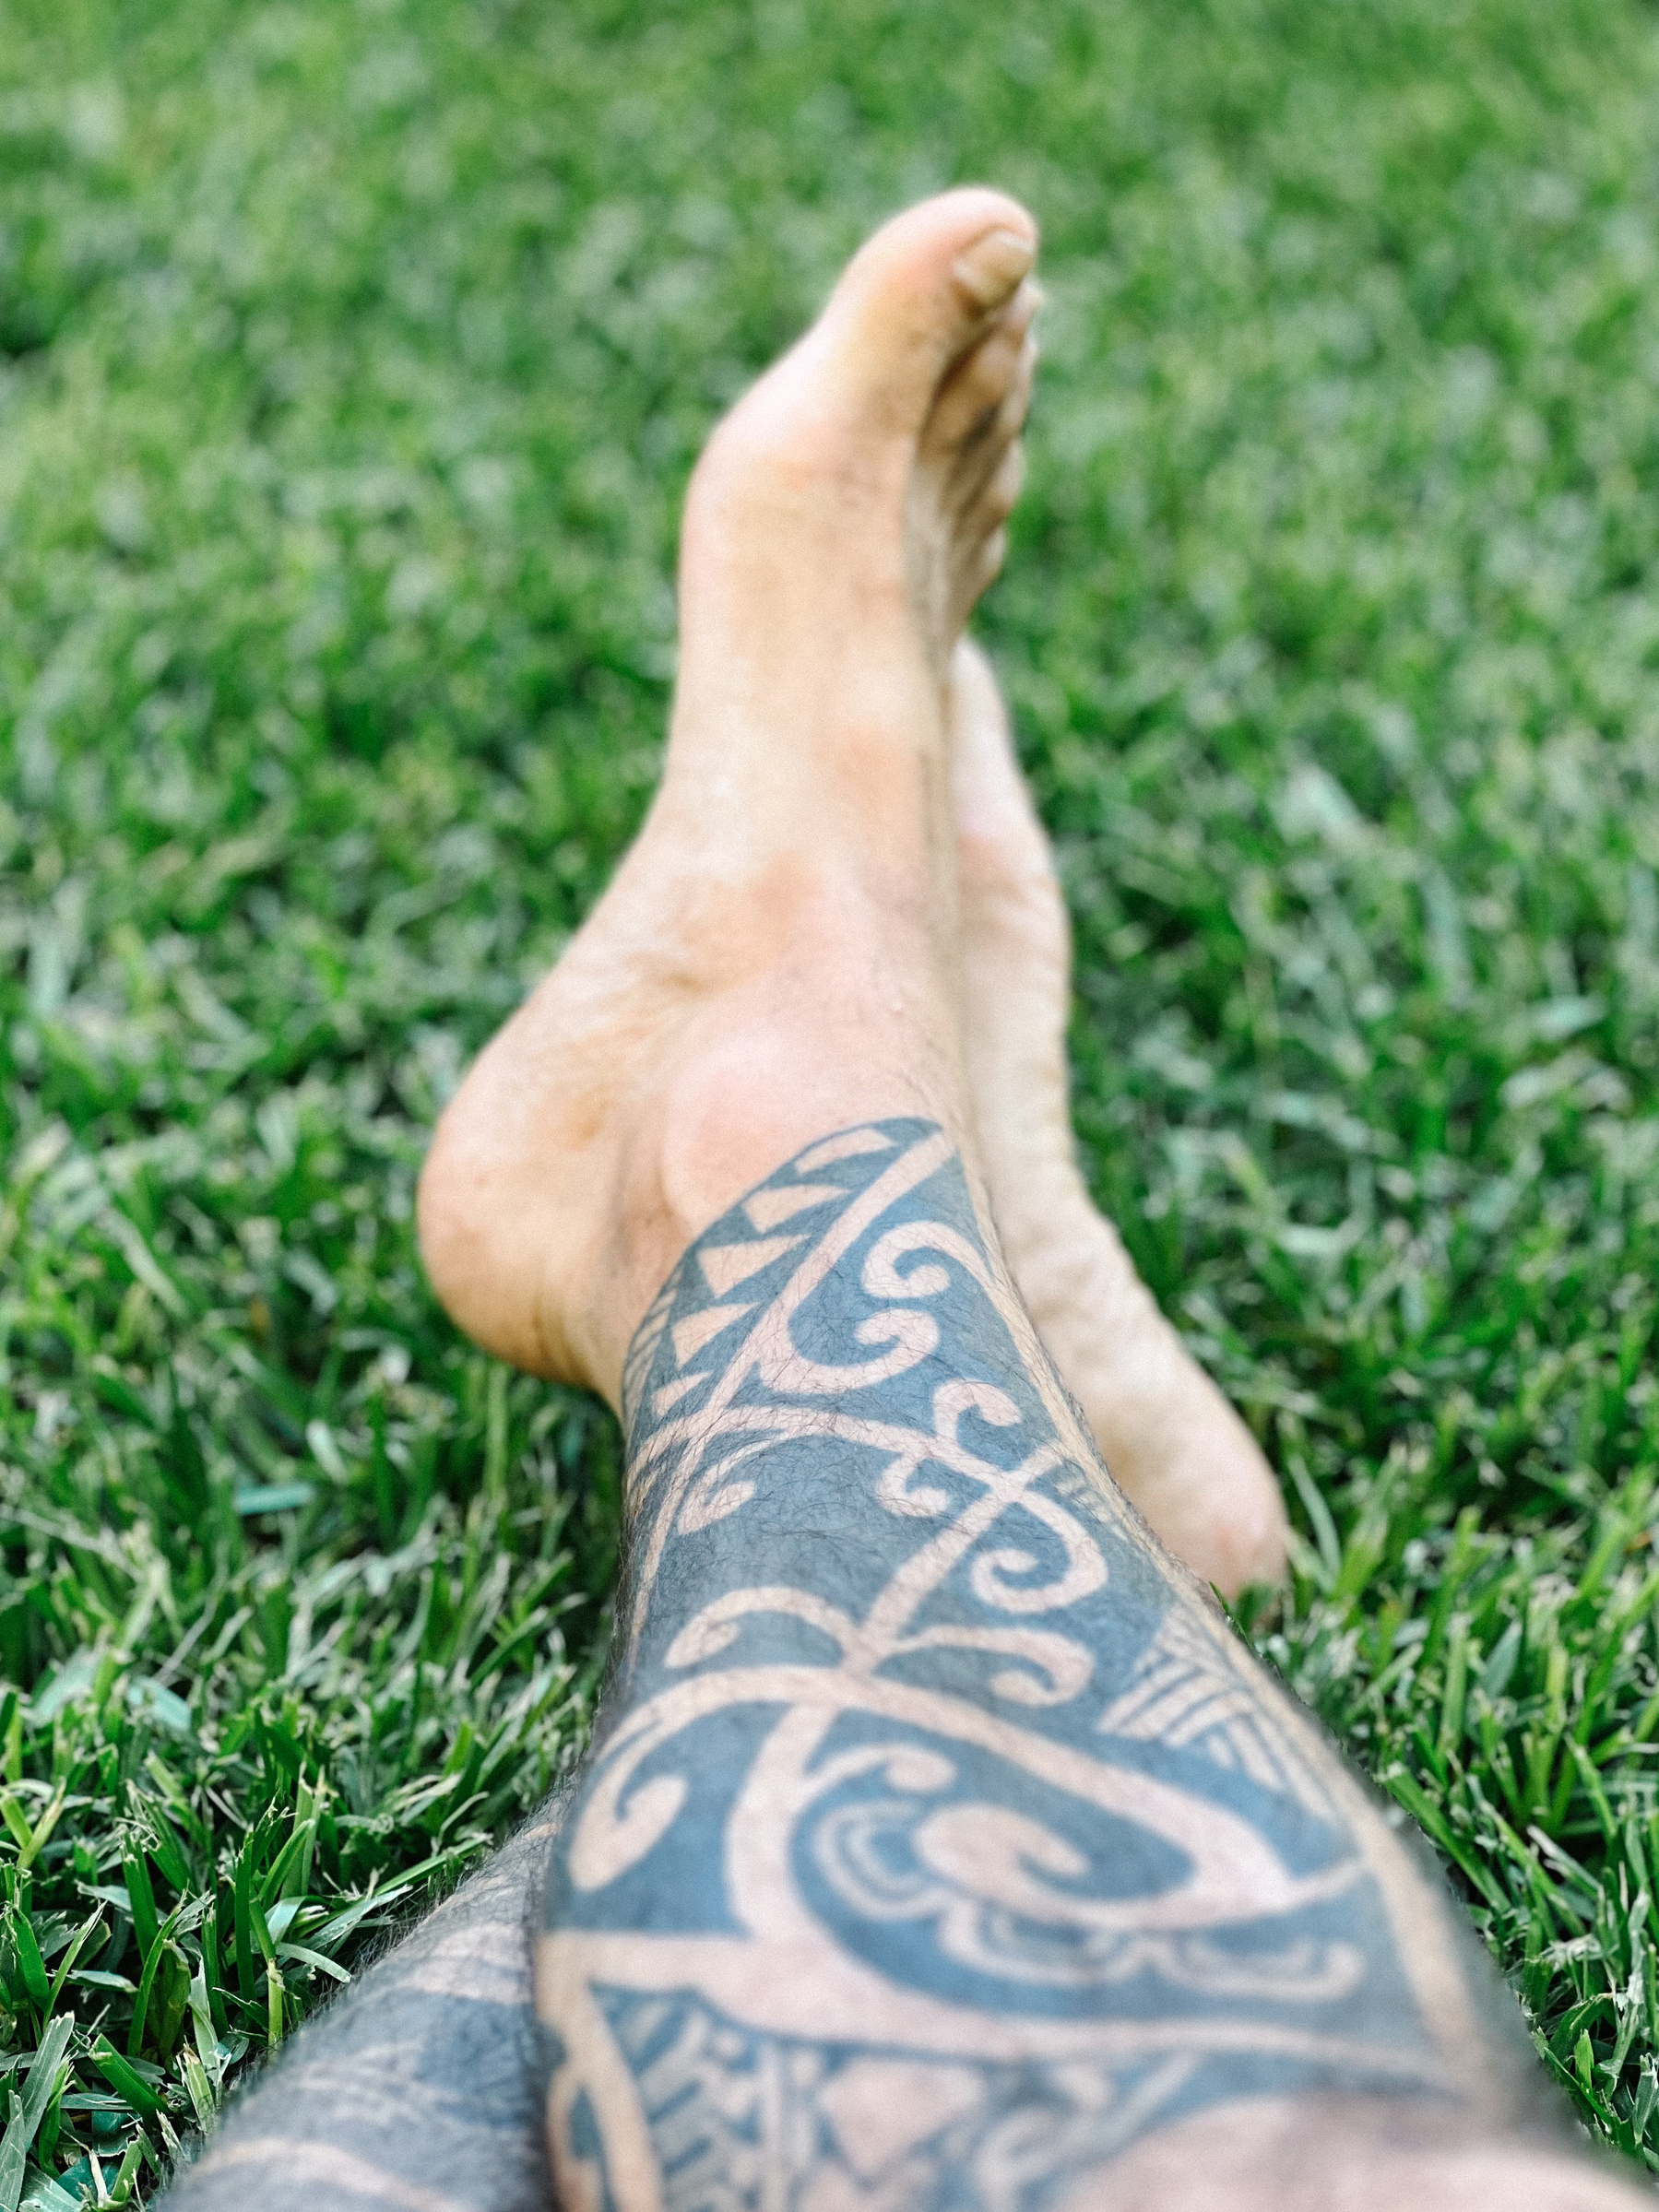 Tattooed legs, crossed, on grass.